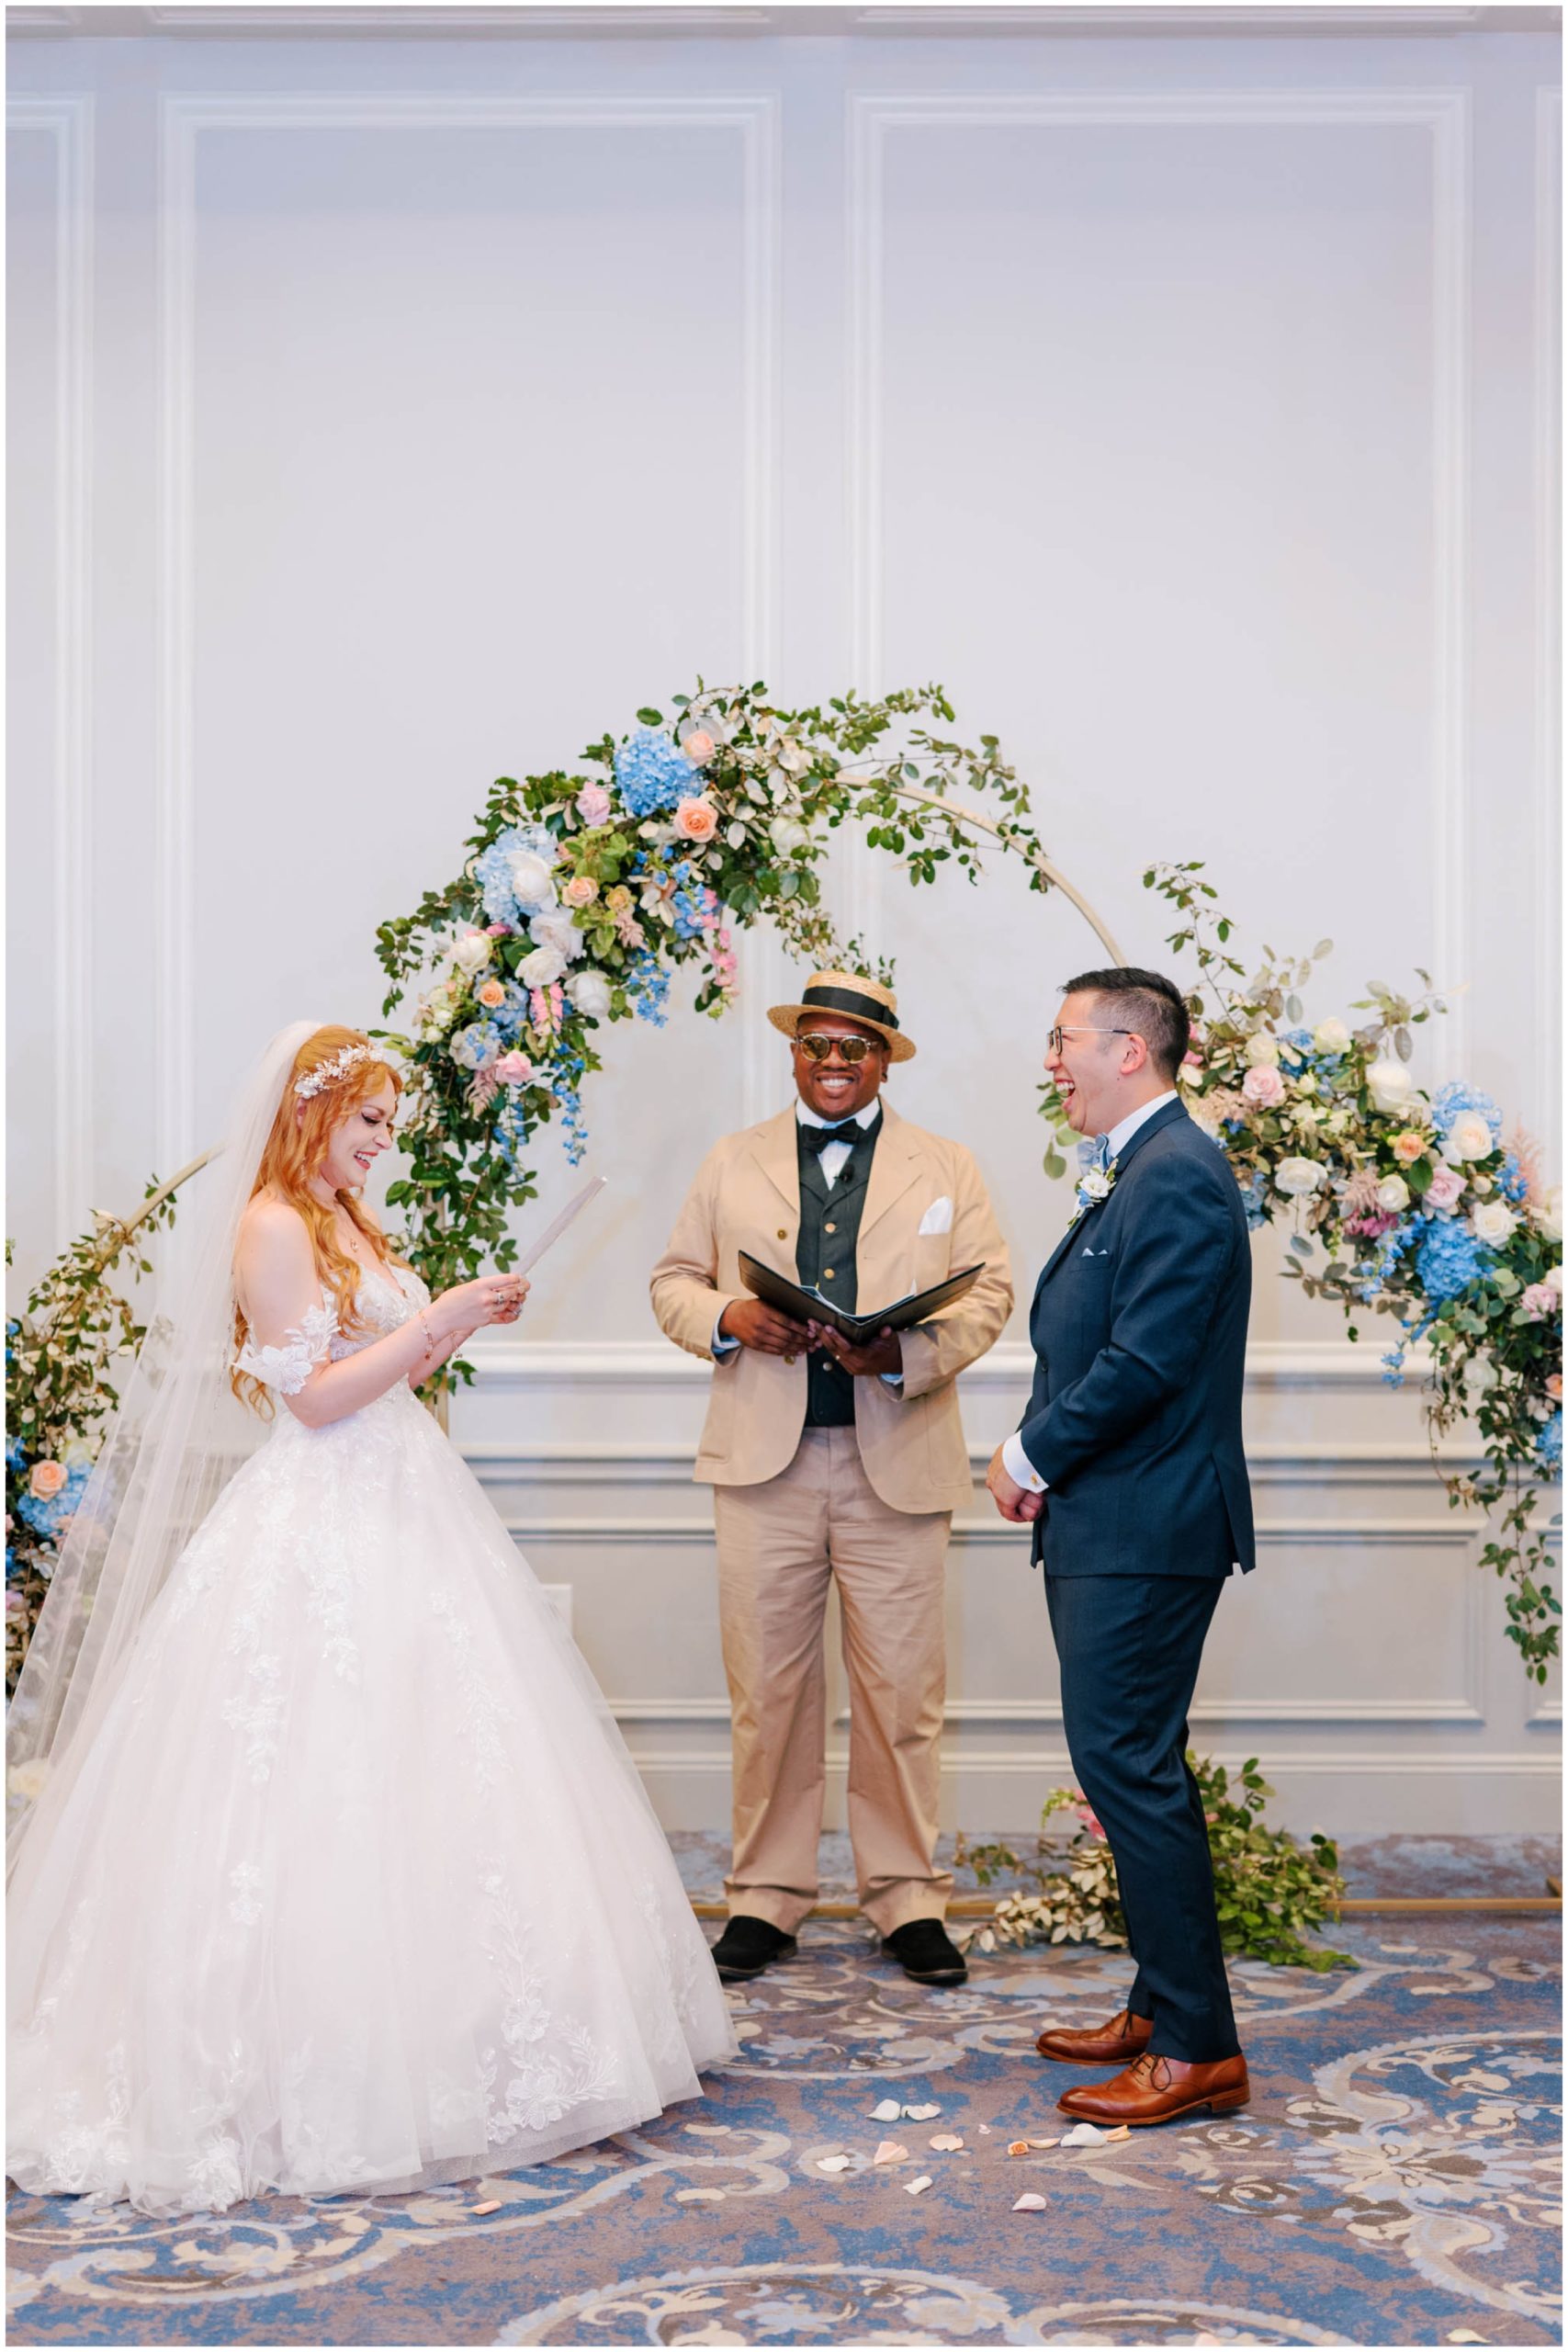 Wedding ceremony at The Carolina Inn